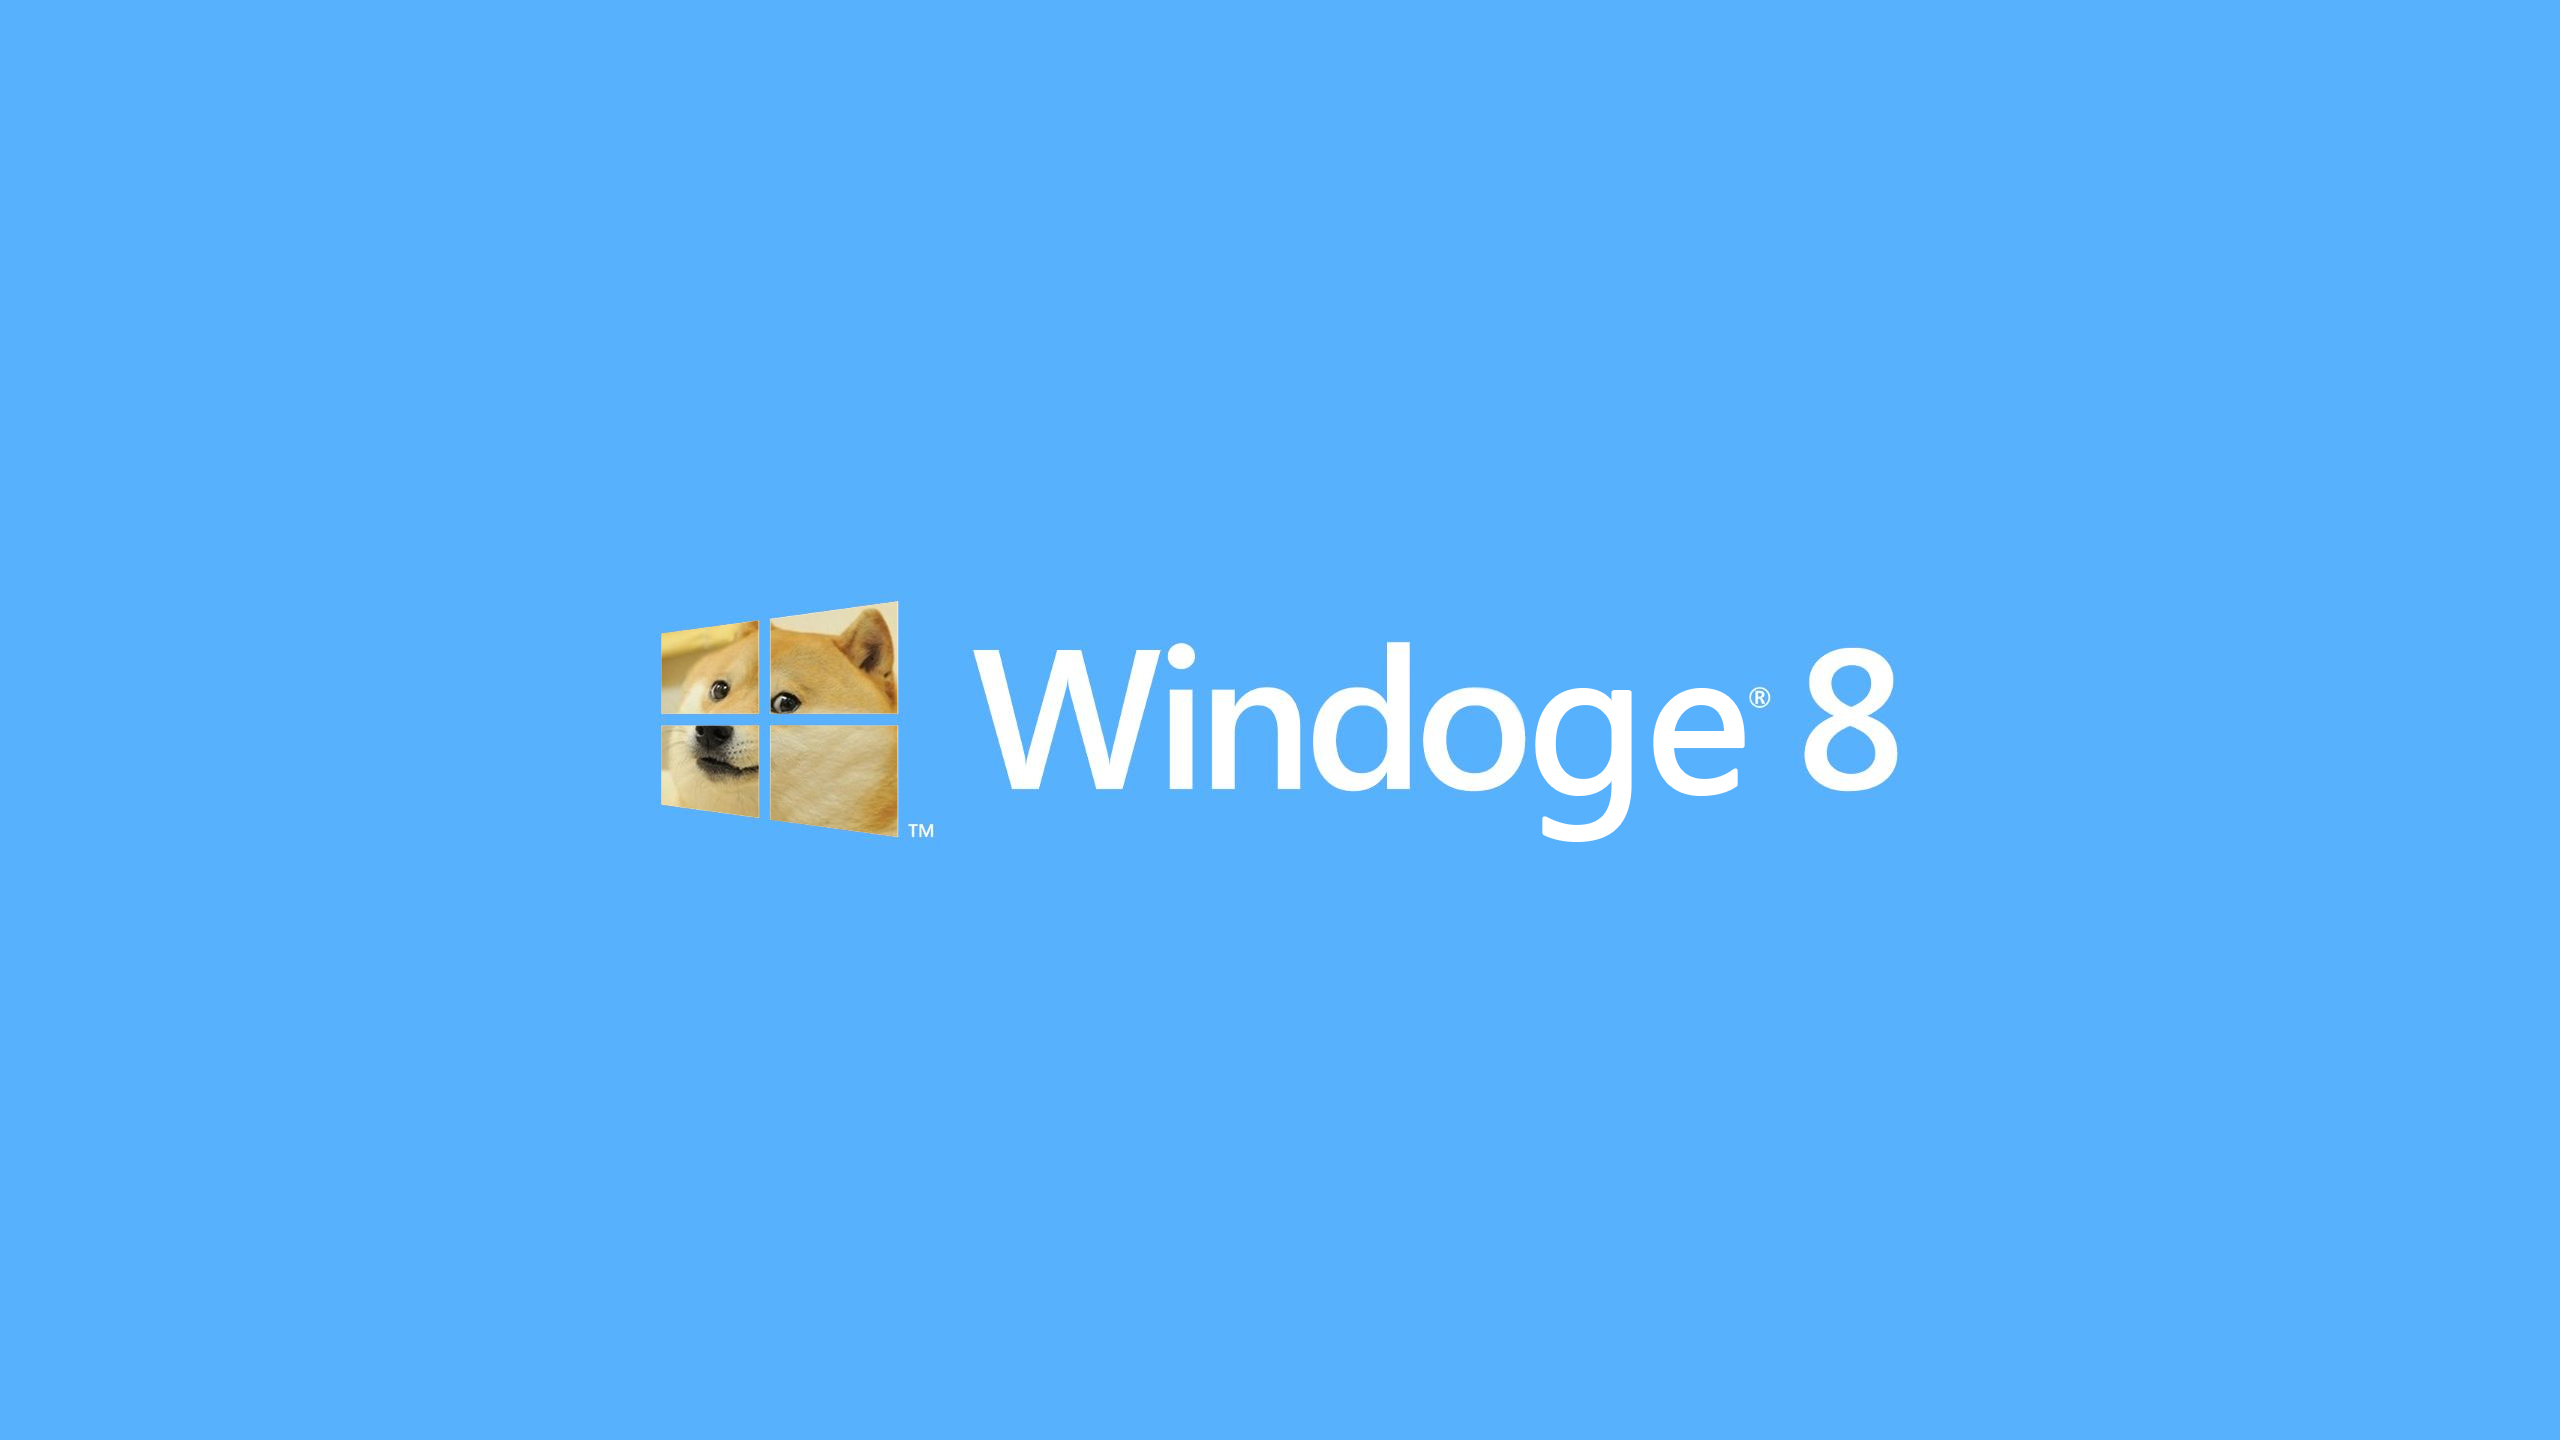 Windoge Doge Meme Wallpaper For Your